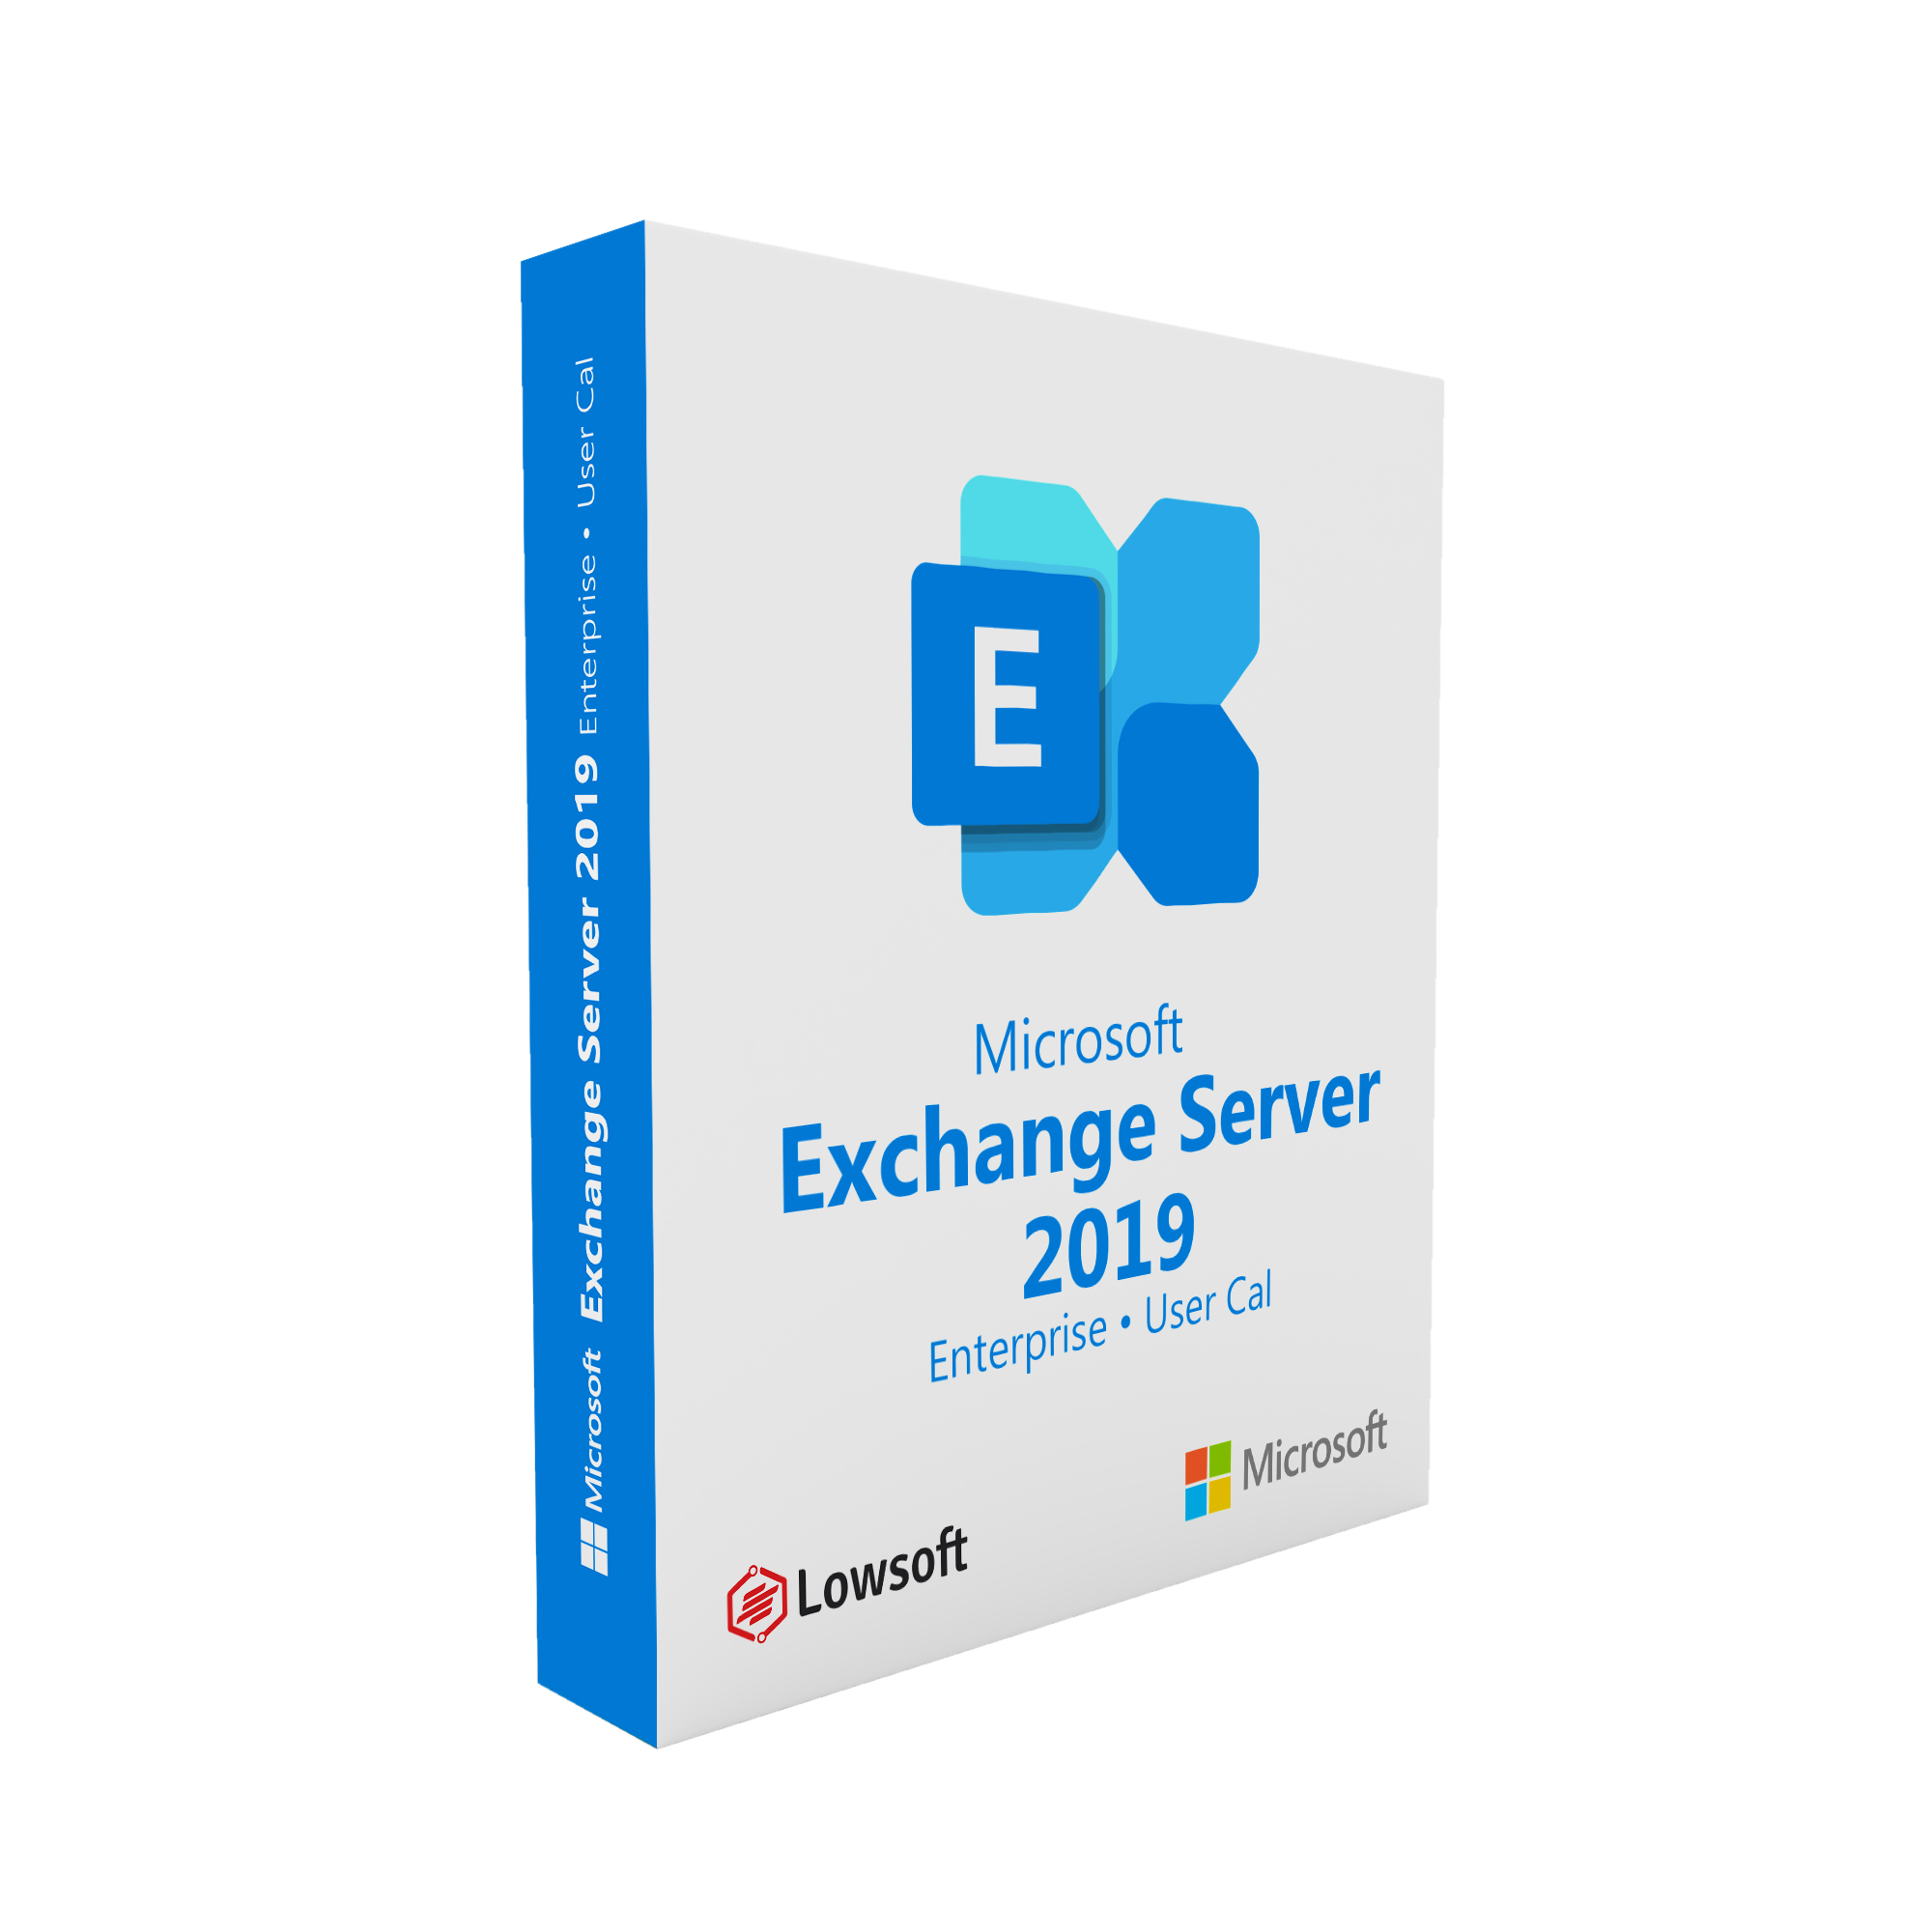 Exchange Server 2019 Enterprise User CAL